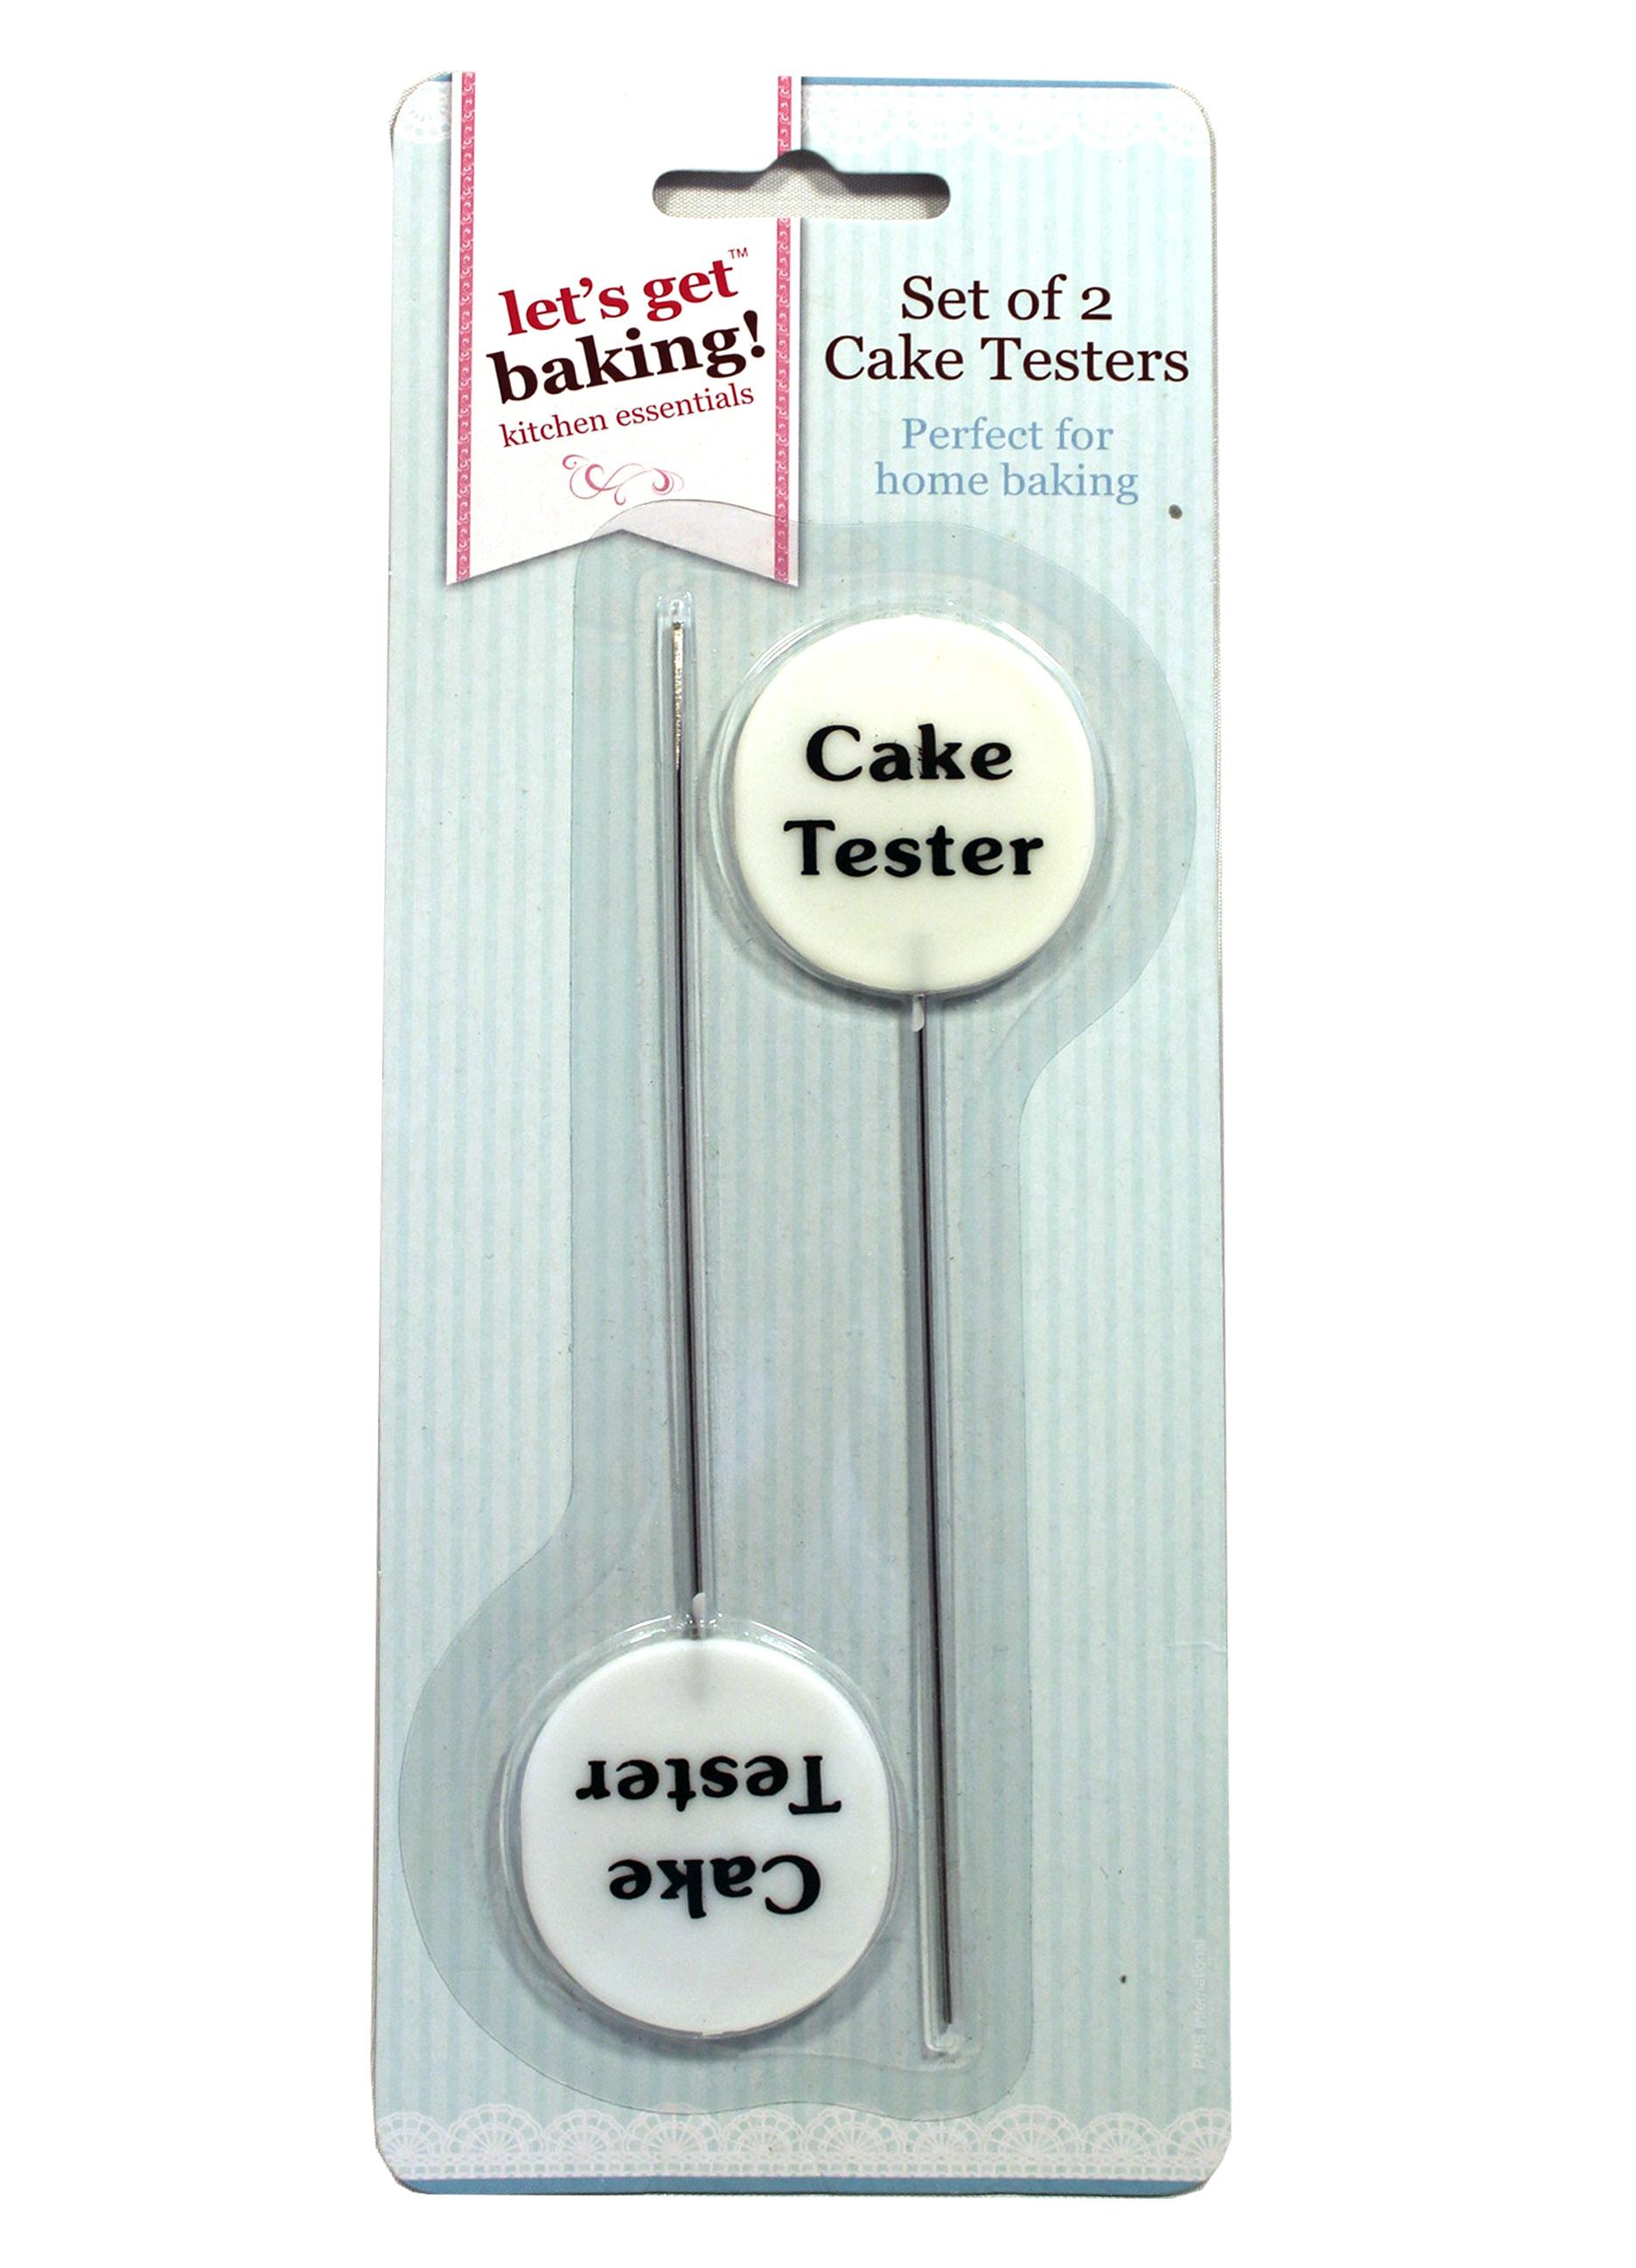 cake tester packaged